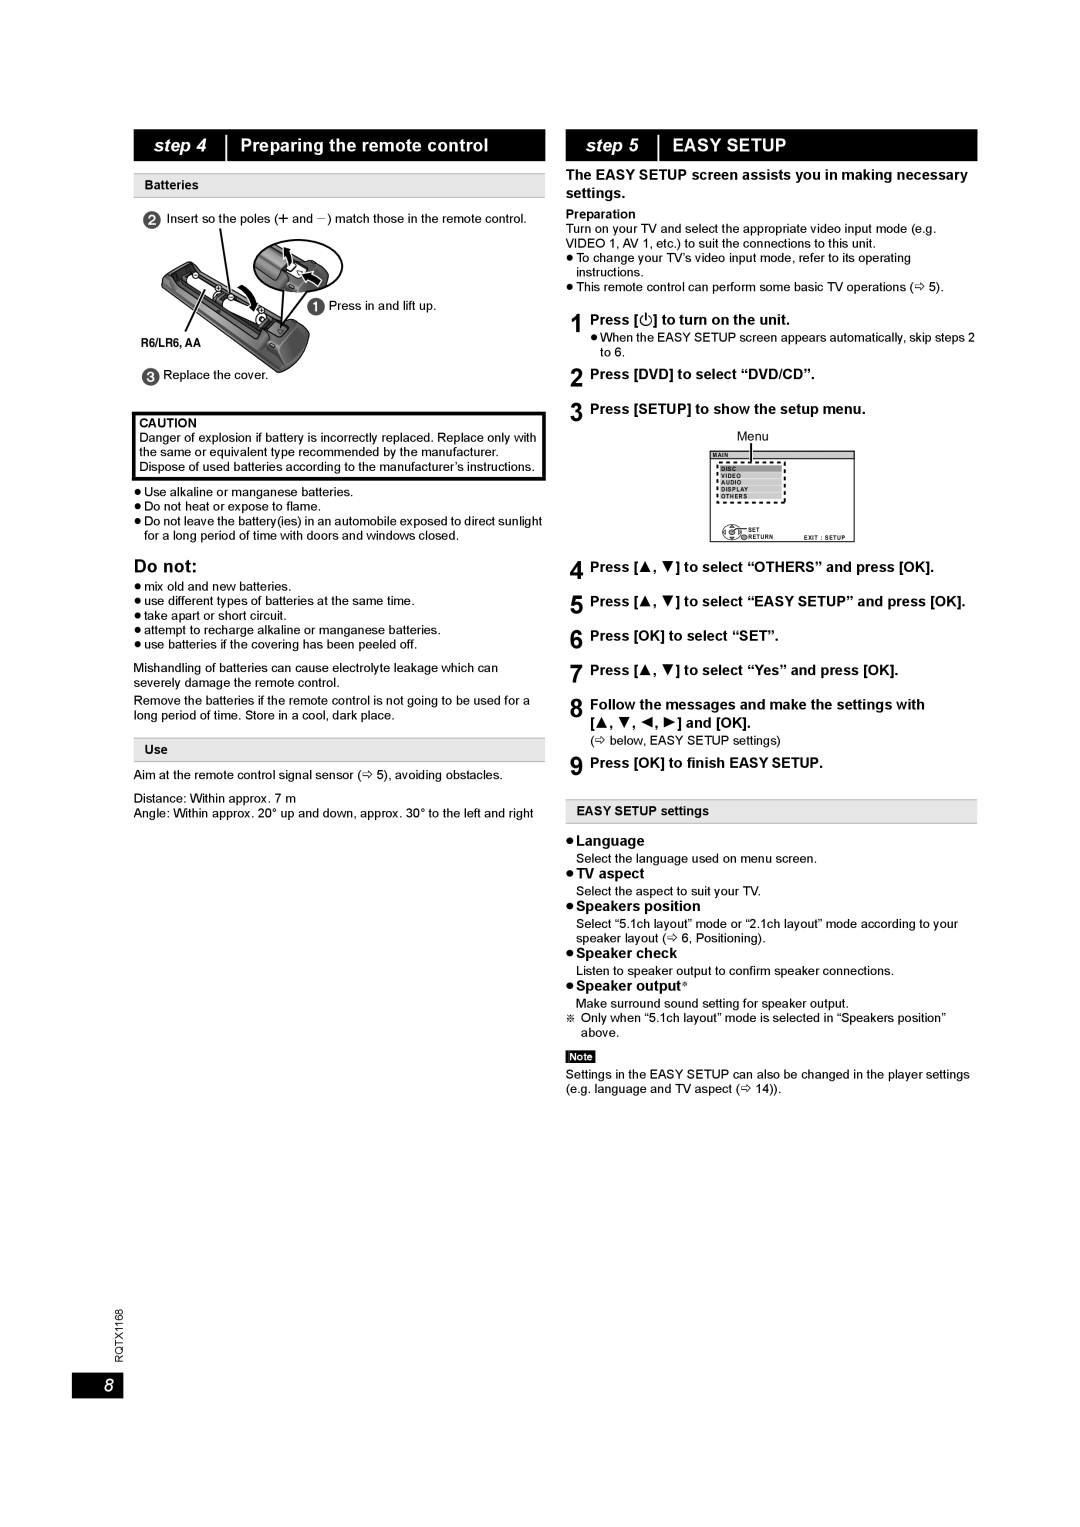 Panasonic SC-PT22 manual Preparing the remote control, Easy Setup, Do not, step 